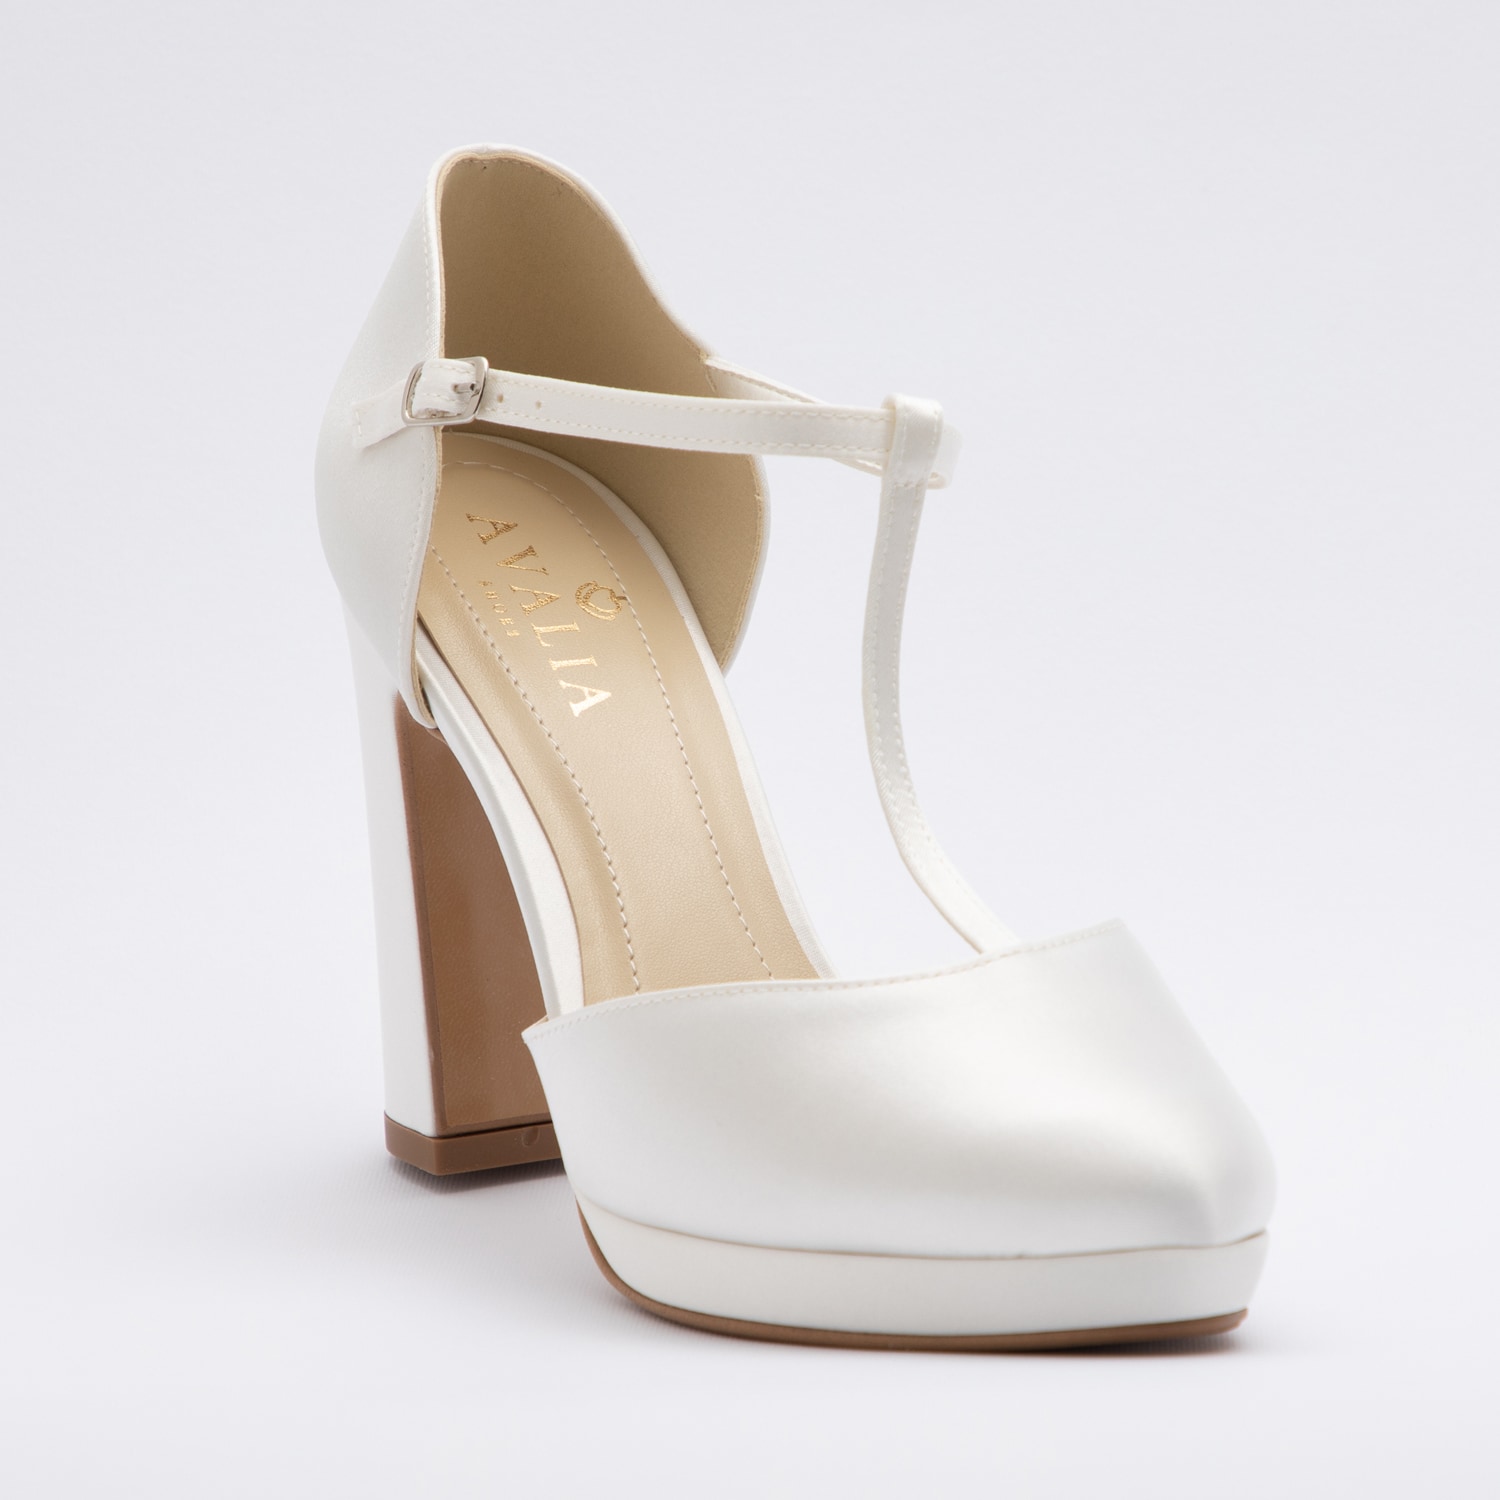 Scarpe Sposa 9 Cm.Patrizia Cavalleri Wedding Shoes Wedding Shoes Heel 9 5 Cm